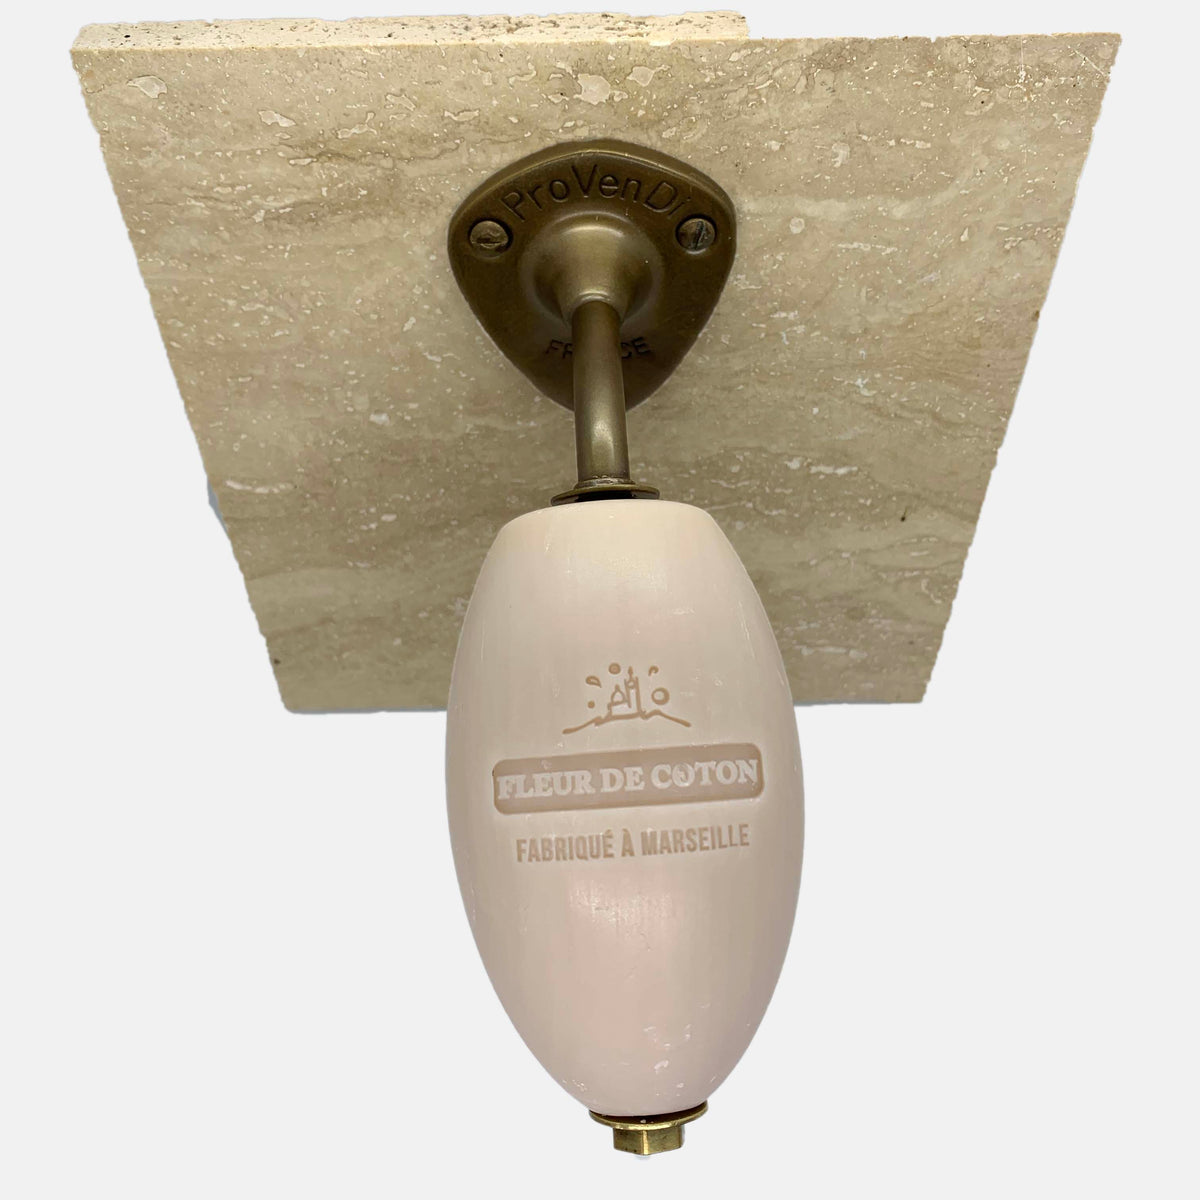 Bronze provdendi french wall soap holder